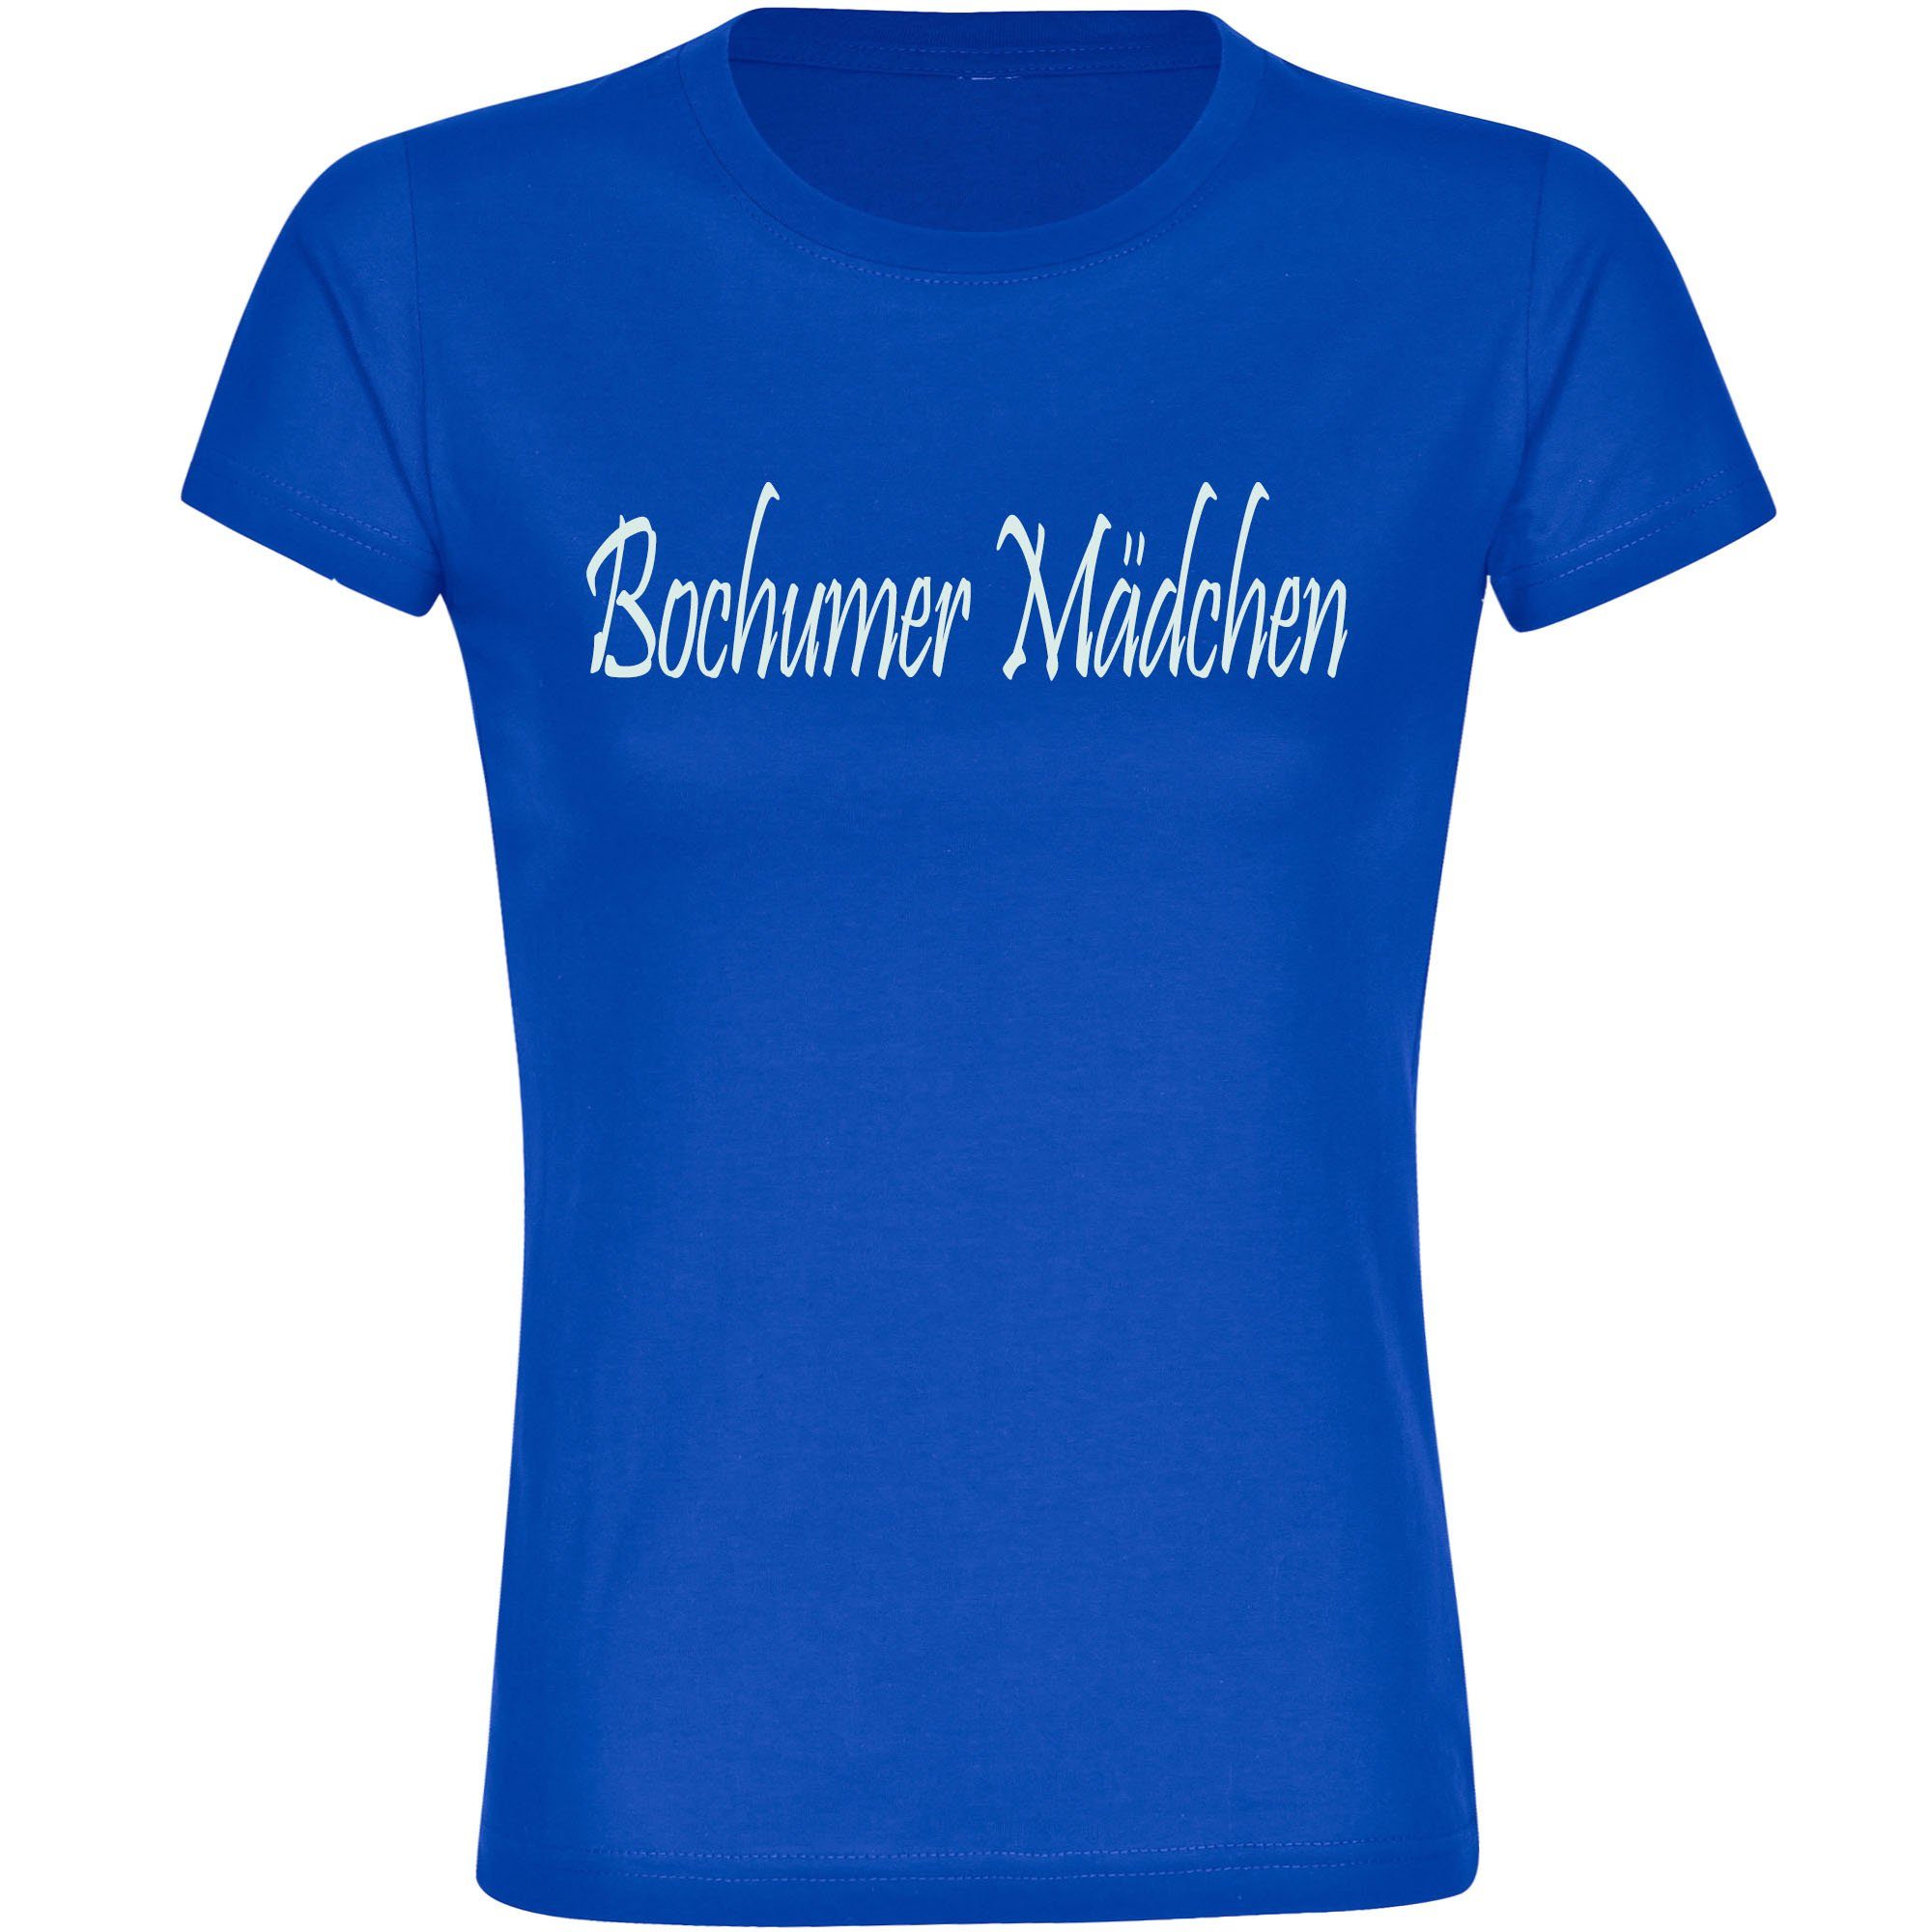 multifanshop T-Shirt Damen Bochum - Bochumer Mädchen - Frauen